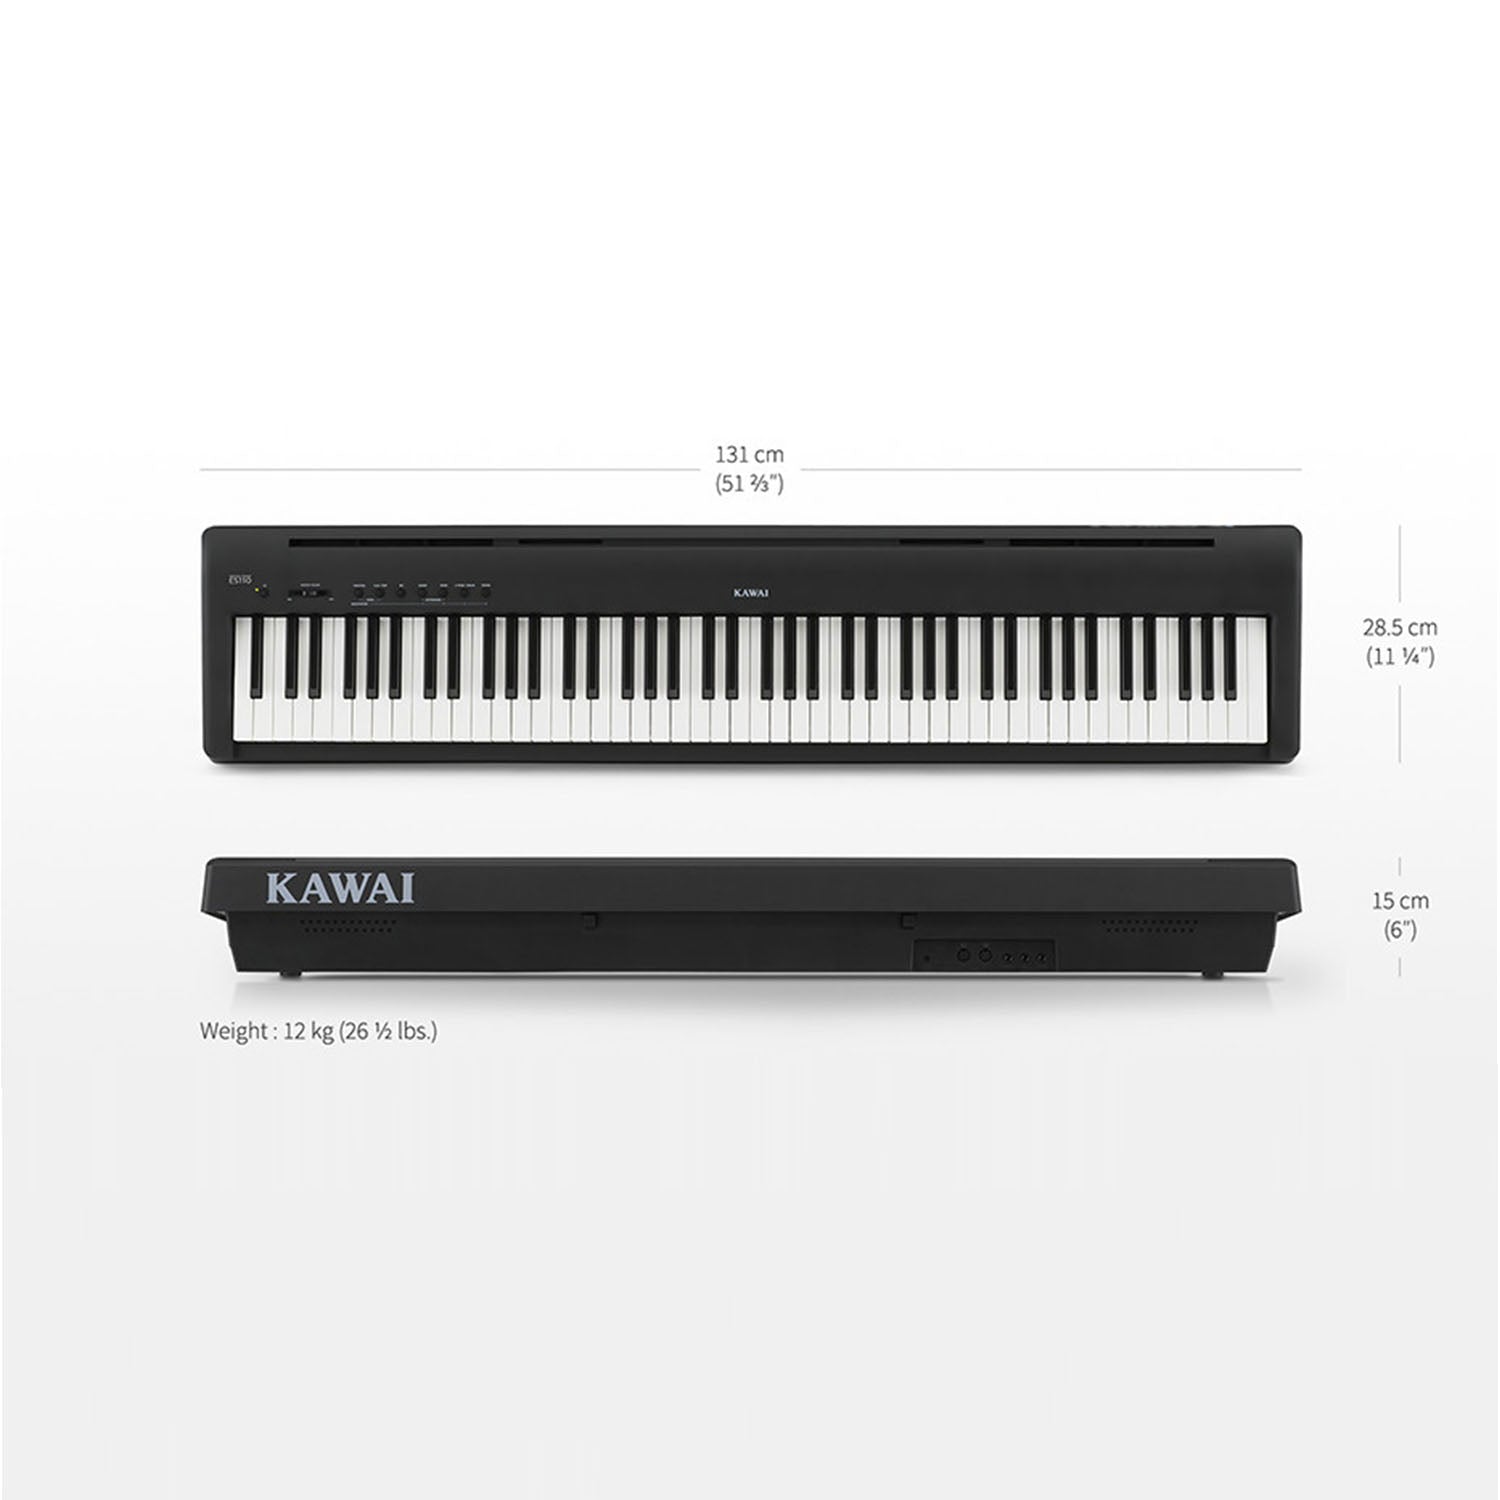 Kawai ES110 88-key Digital Piano with Speakers - Gloss Black